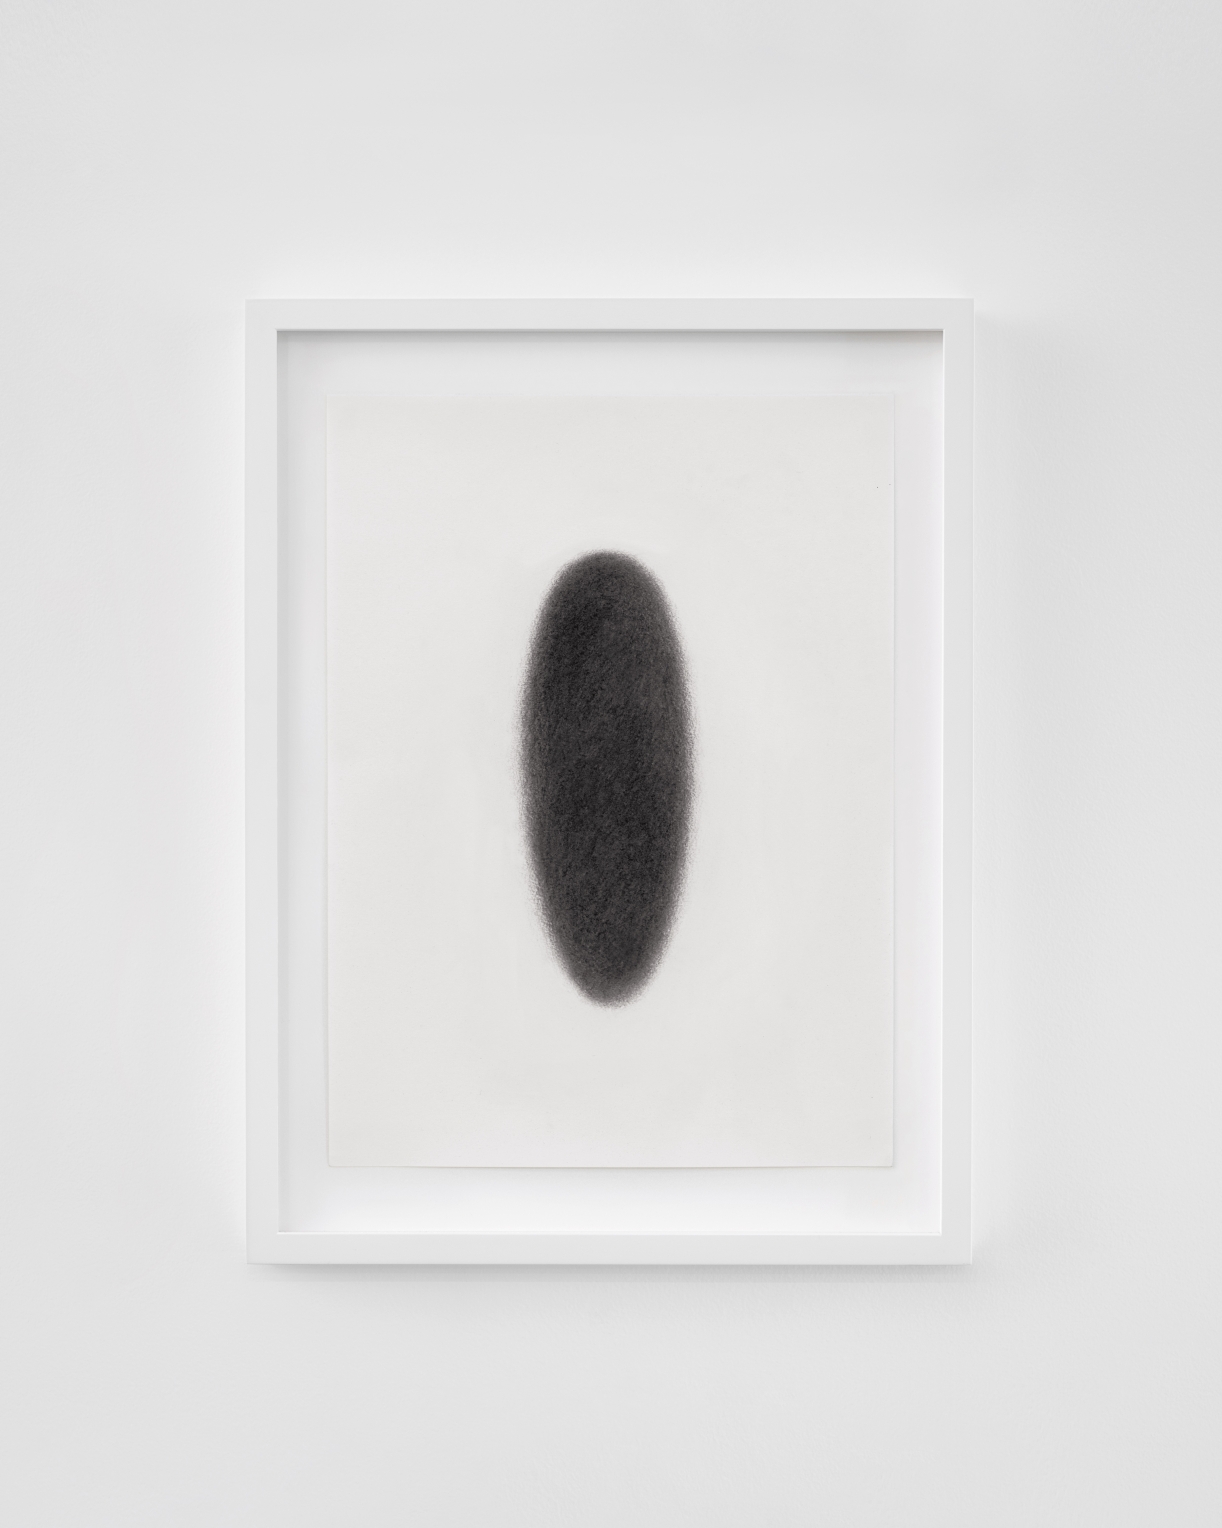 Tarik Kiswanson, Open Window (Nest), 2021, Charcoal drawing on paper, 50 x 37.6 x 3.4 cm